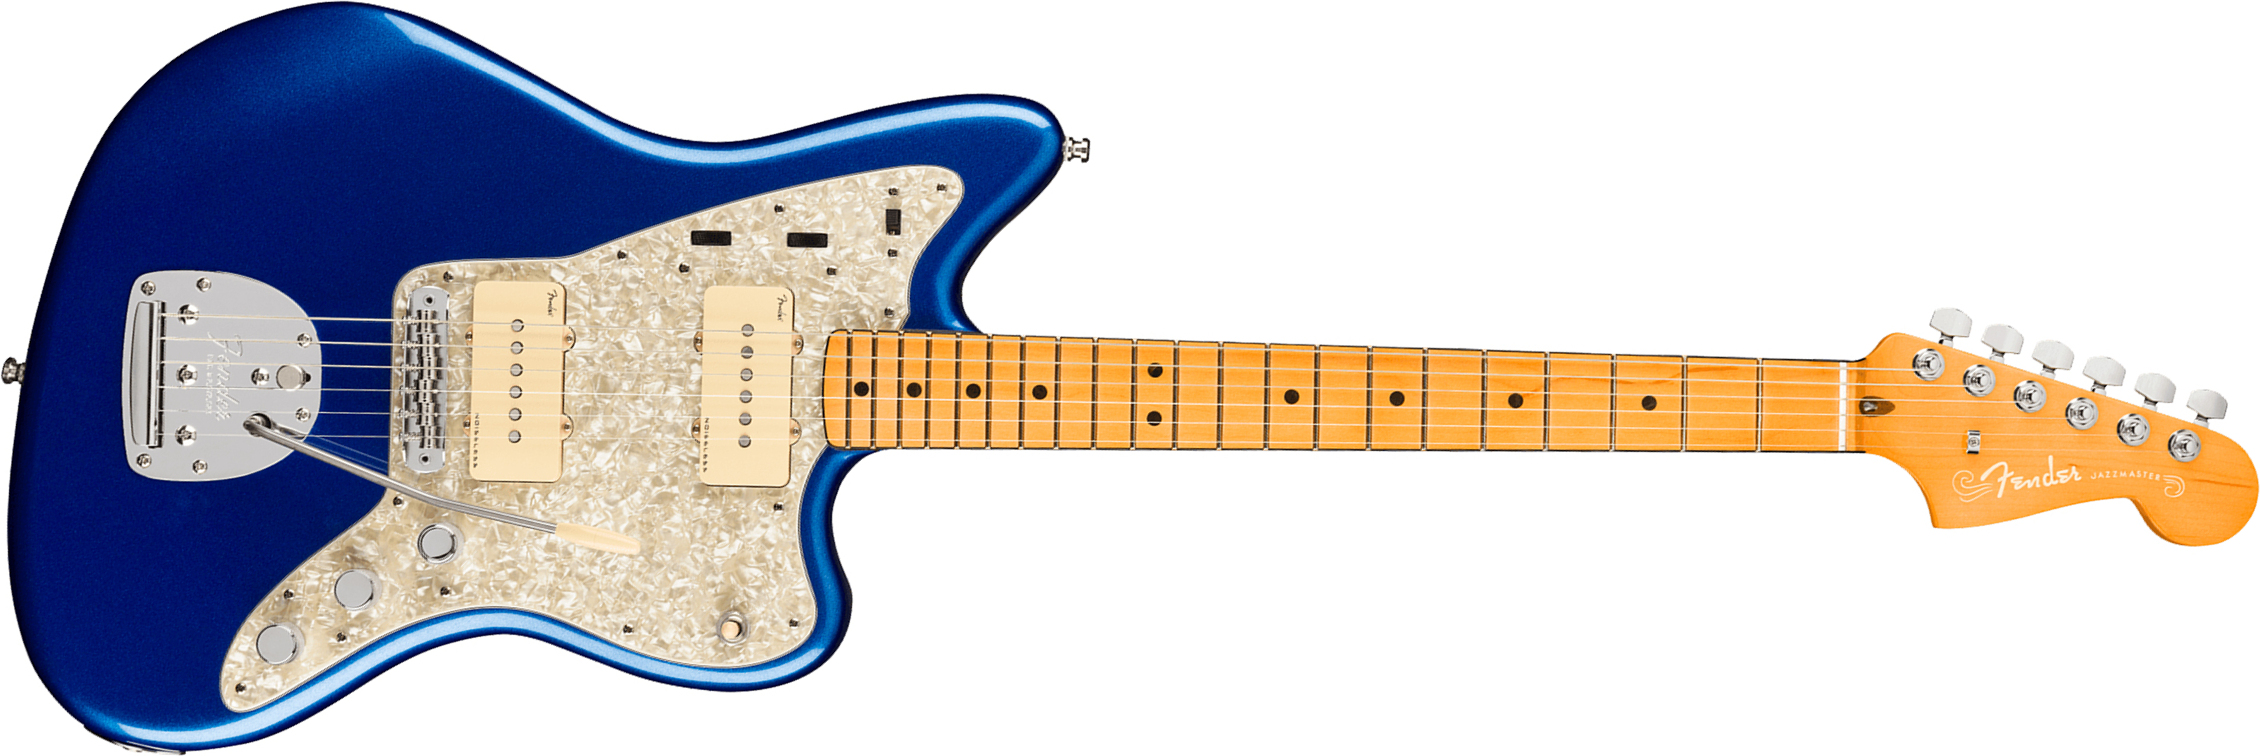 Fender Jazzmaster American Ultra 2019 Usa Mn - Cobra Blue - Retro rock electric guitar - Main picture